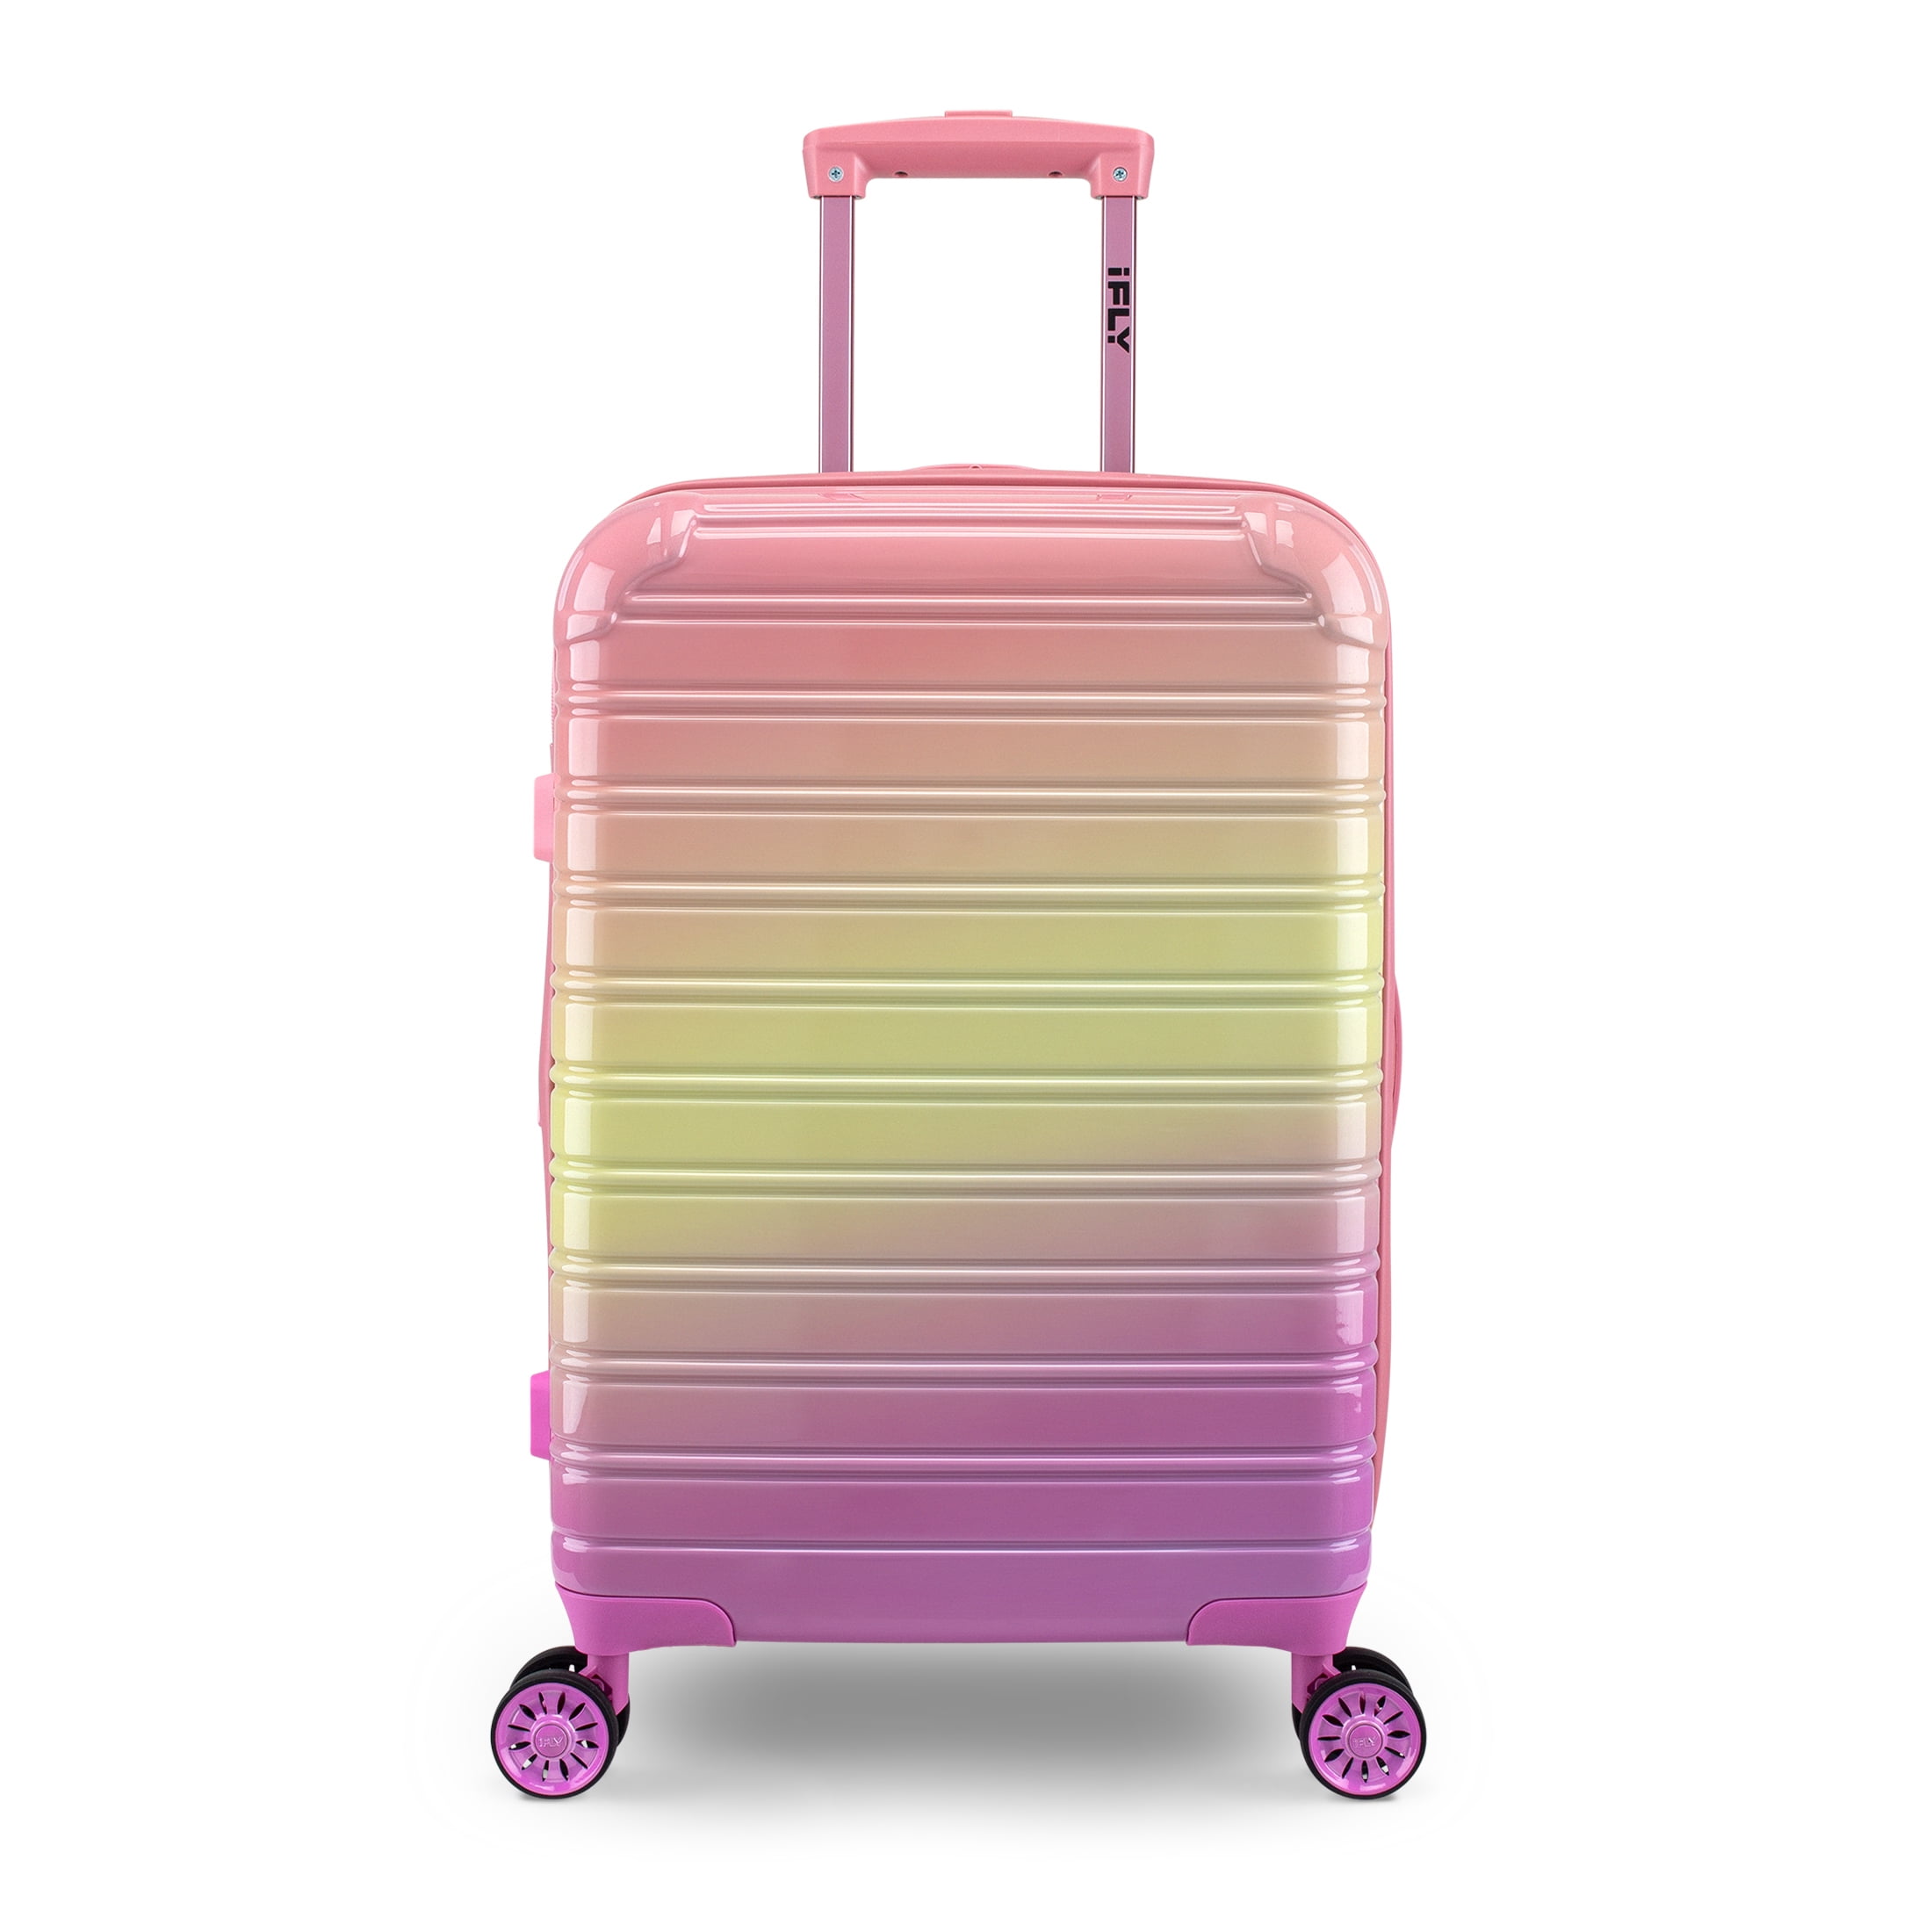 iFLY Hardside Carry-on Luggage Fibertech 20